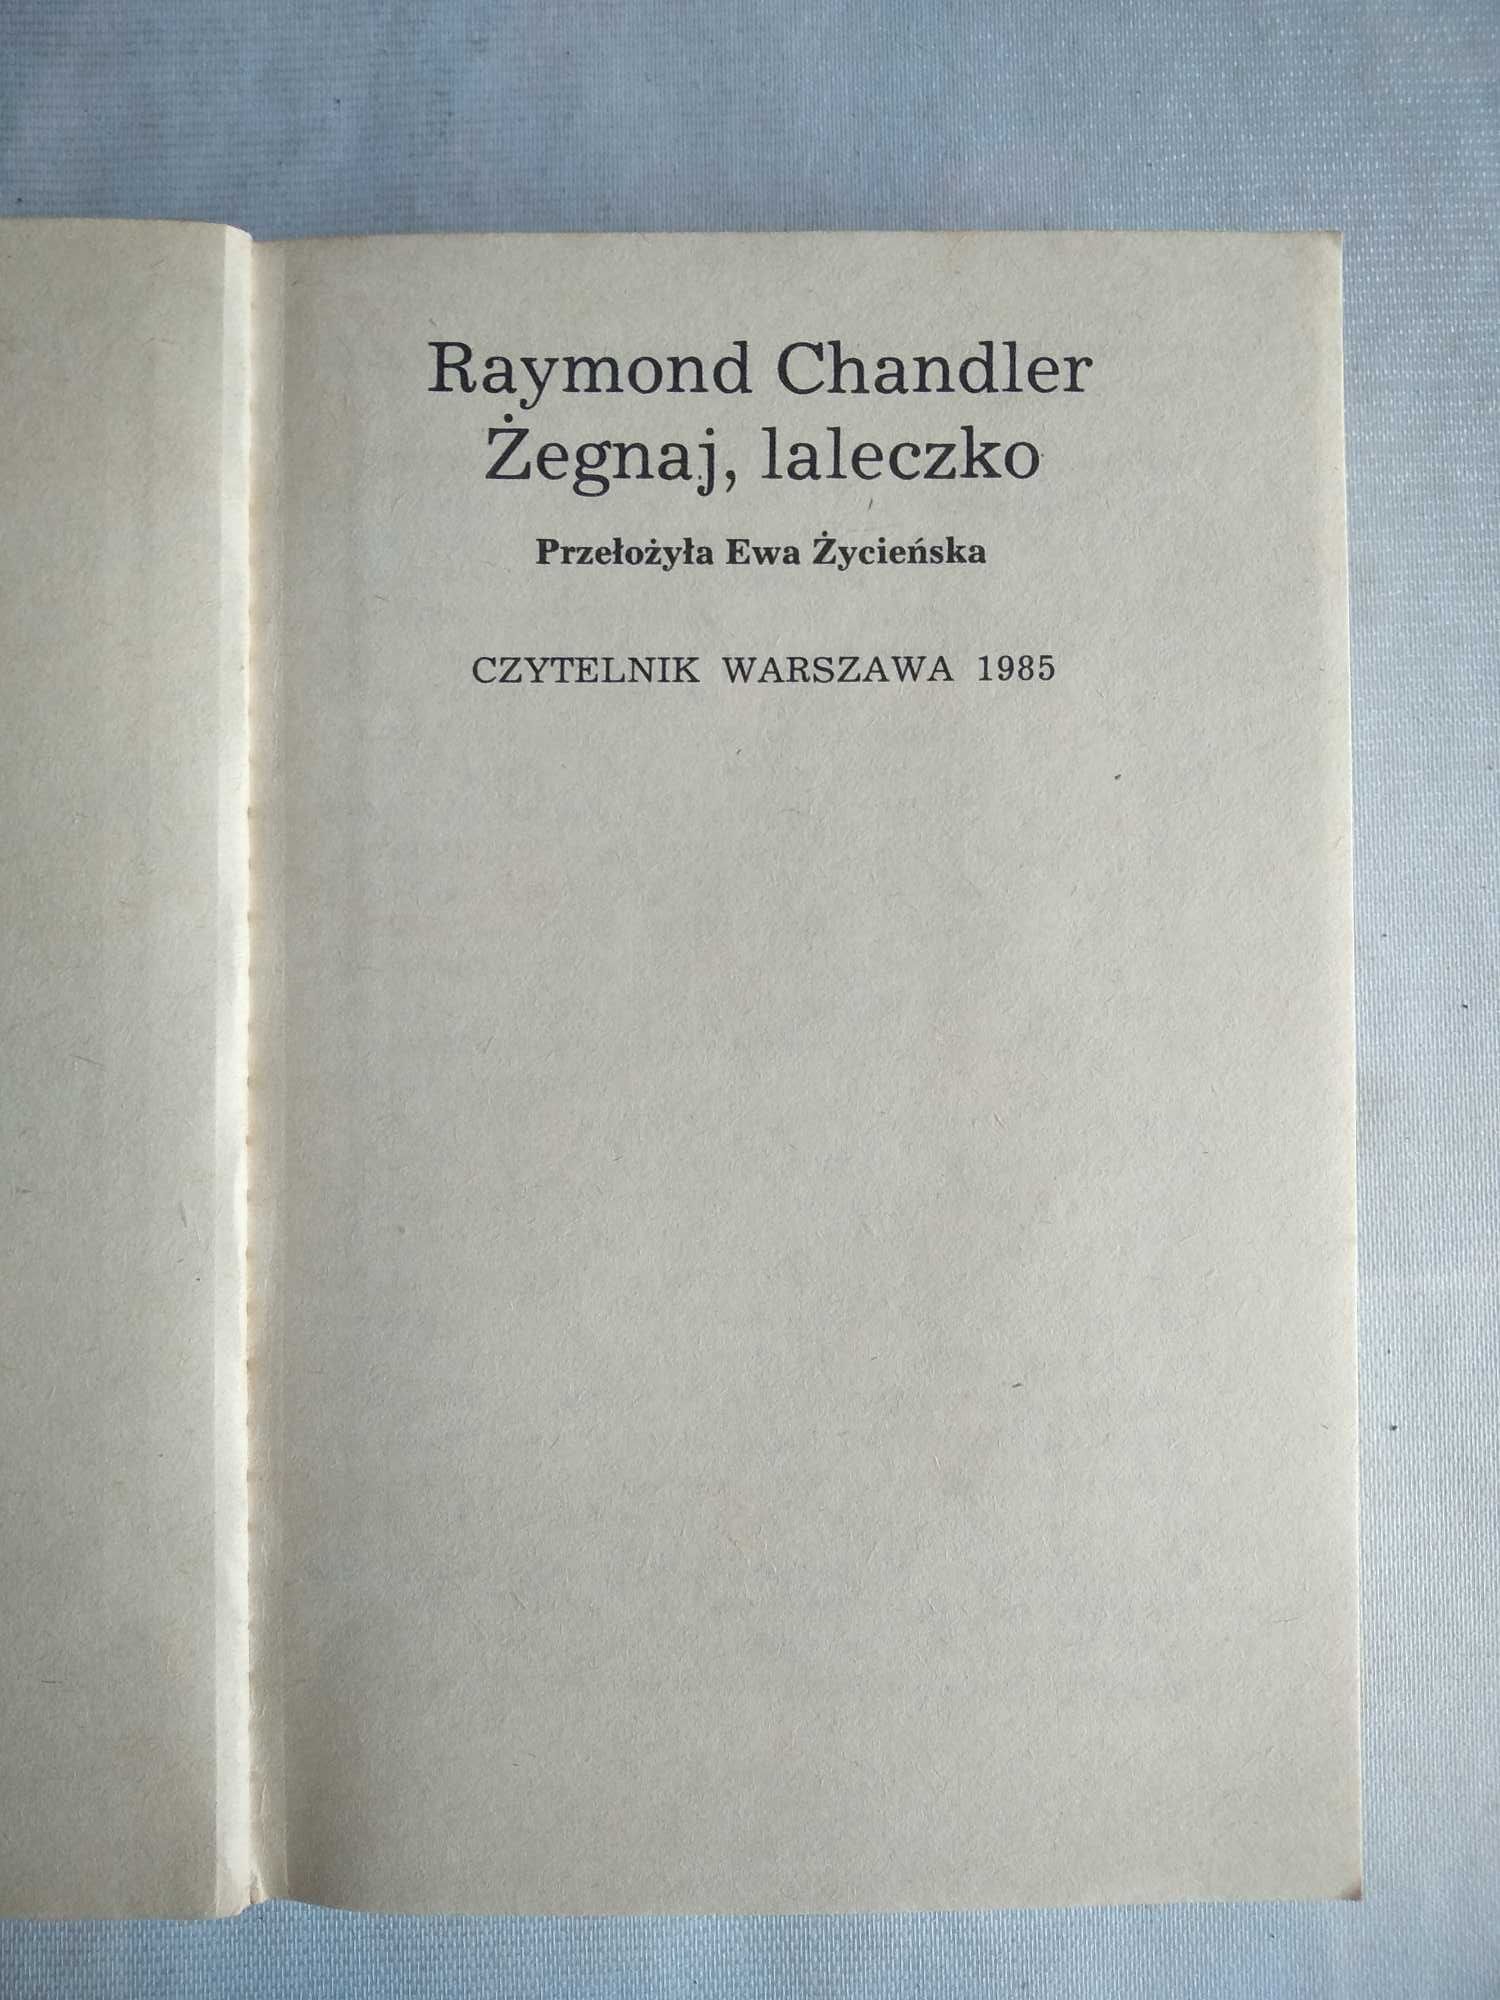 "Żegnaj, laleczko" Raymond Chandler